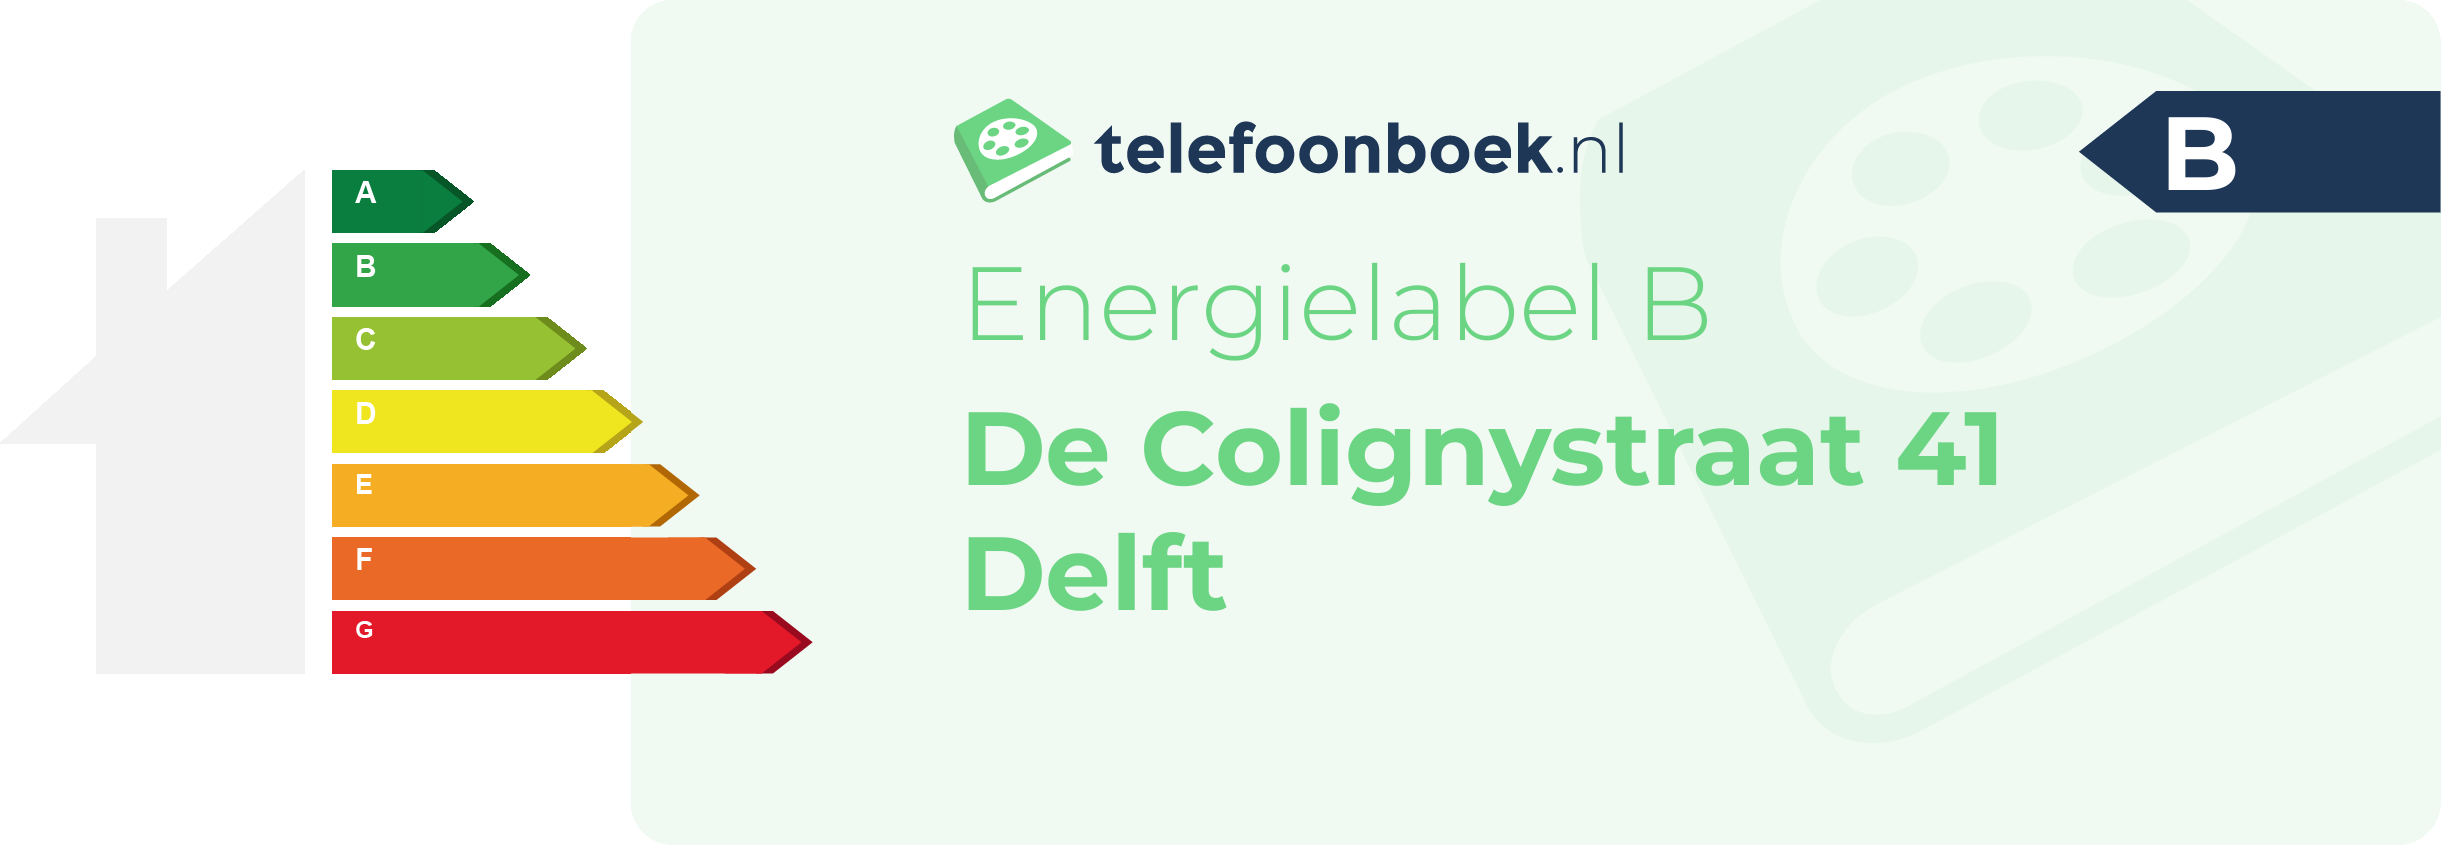 Energielabel De Colignystraat 41 Delft